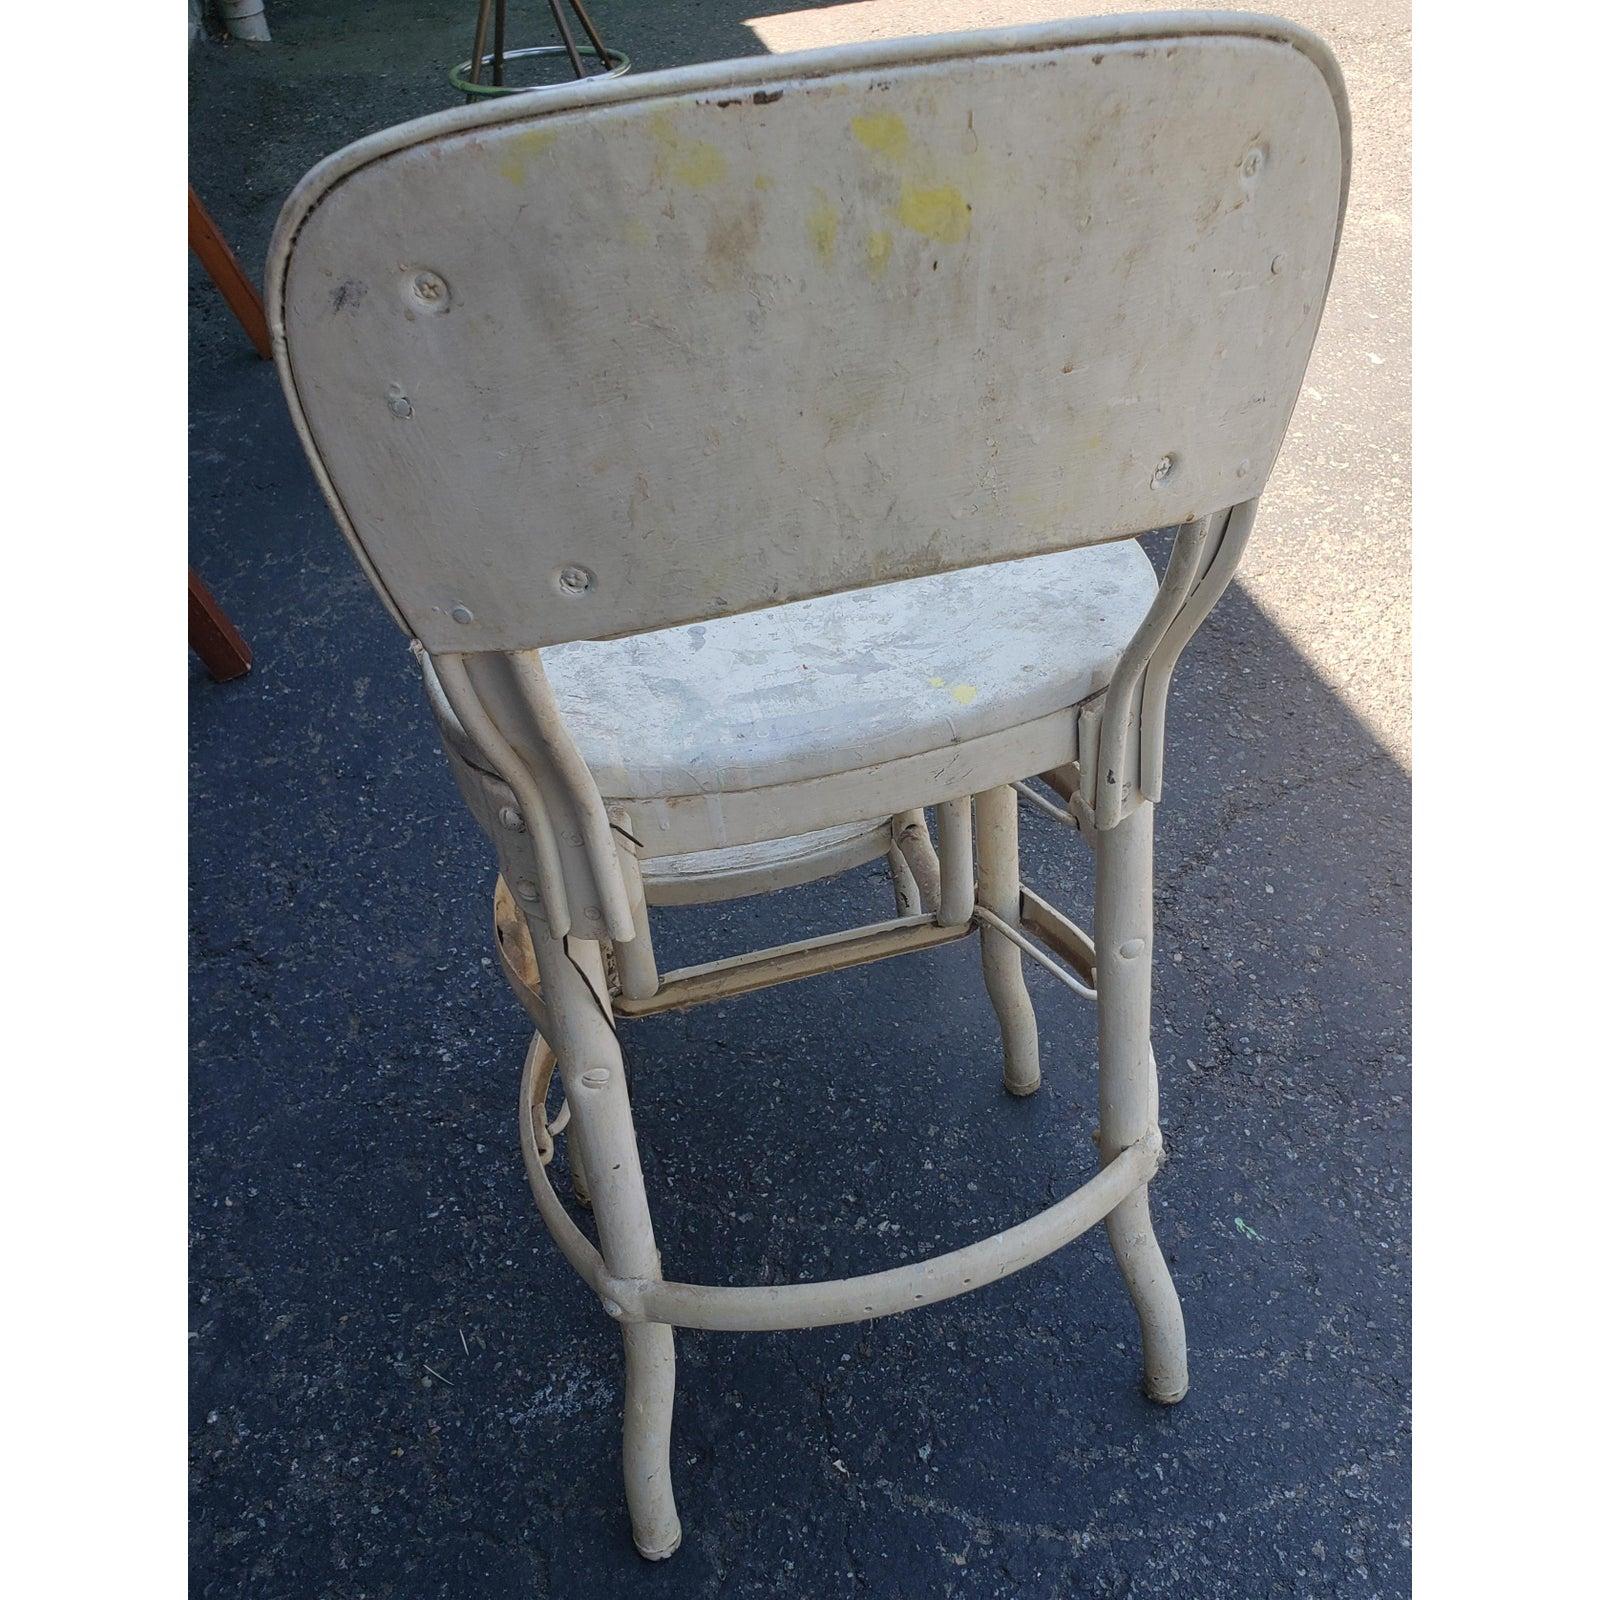 cosco vintage step stool